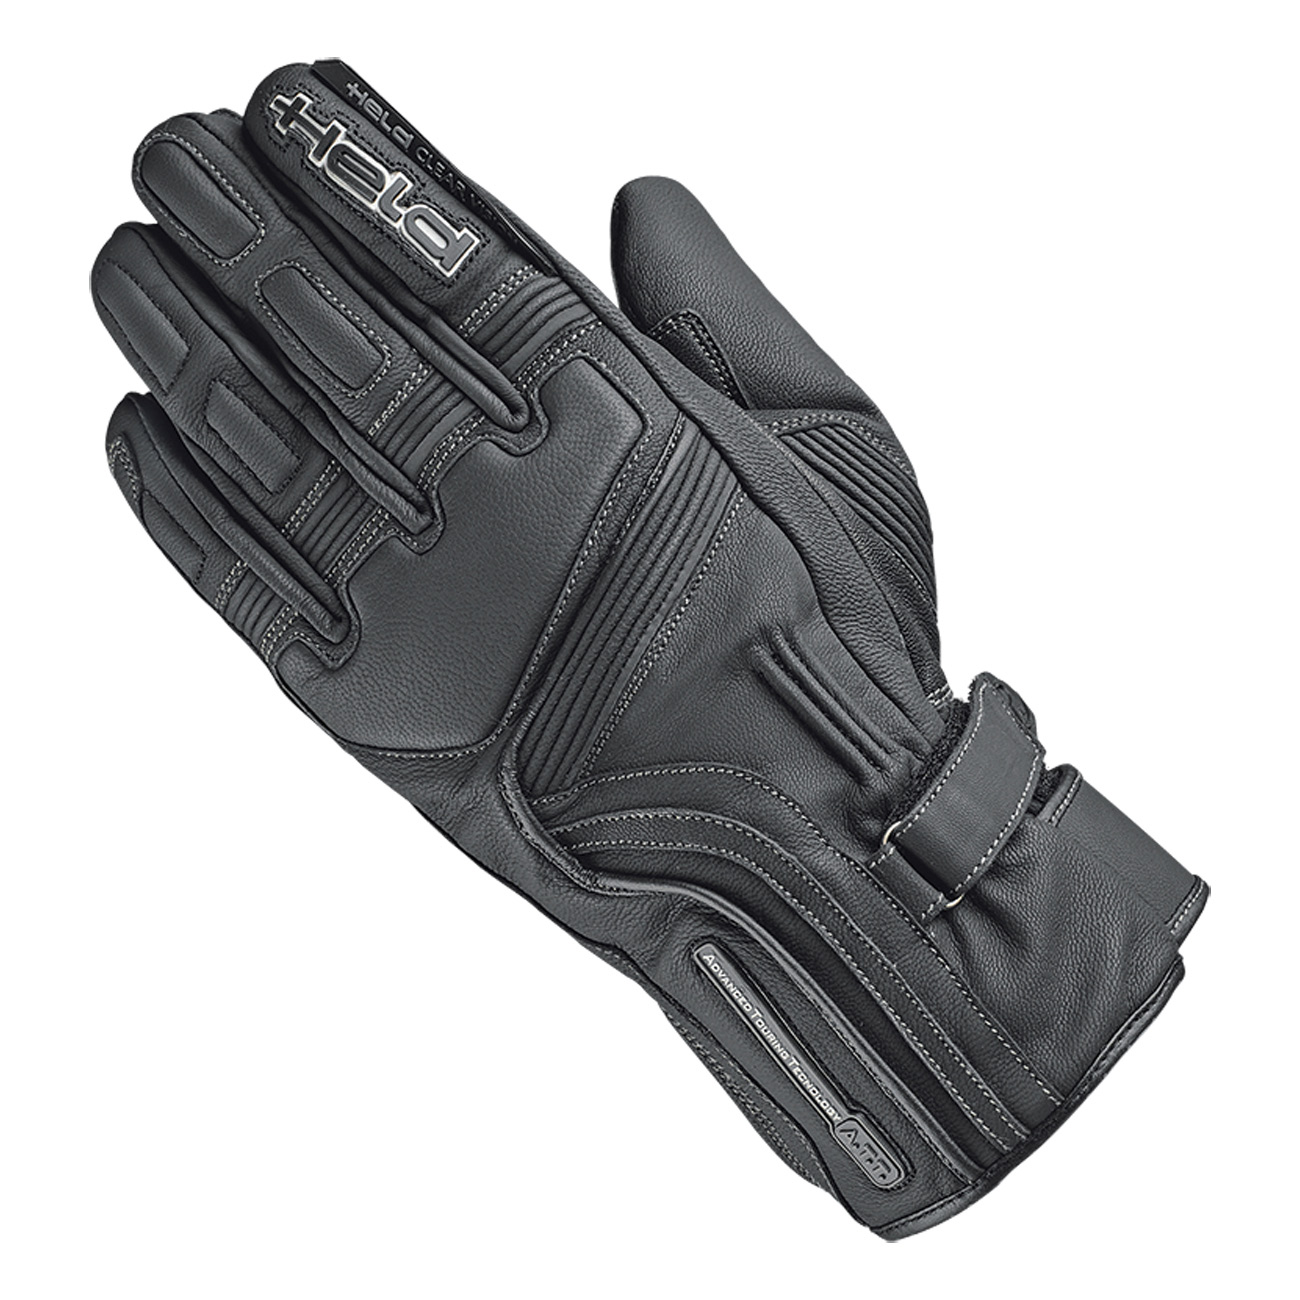 9 Alpinestars "Syncro DryS" Schwarz Motorrad-Handschuhe in Größe L Gloves 